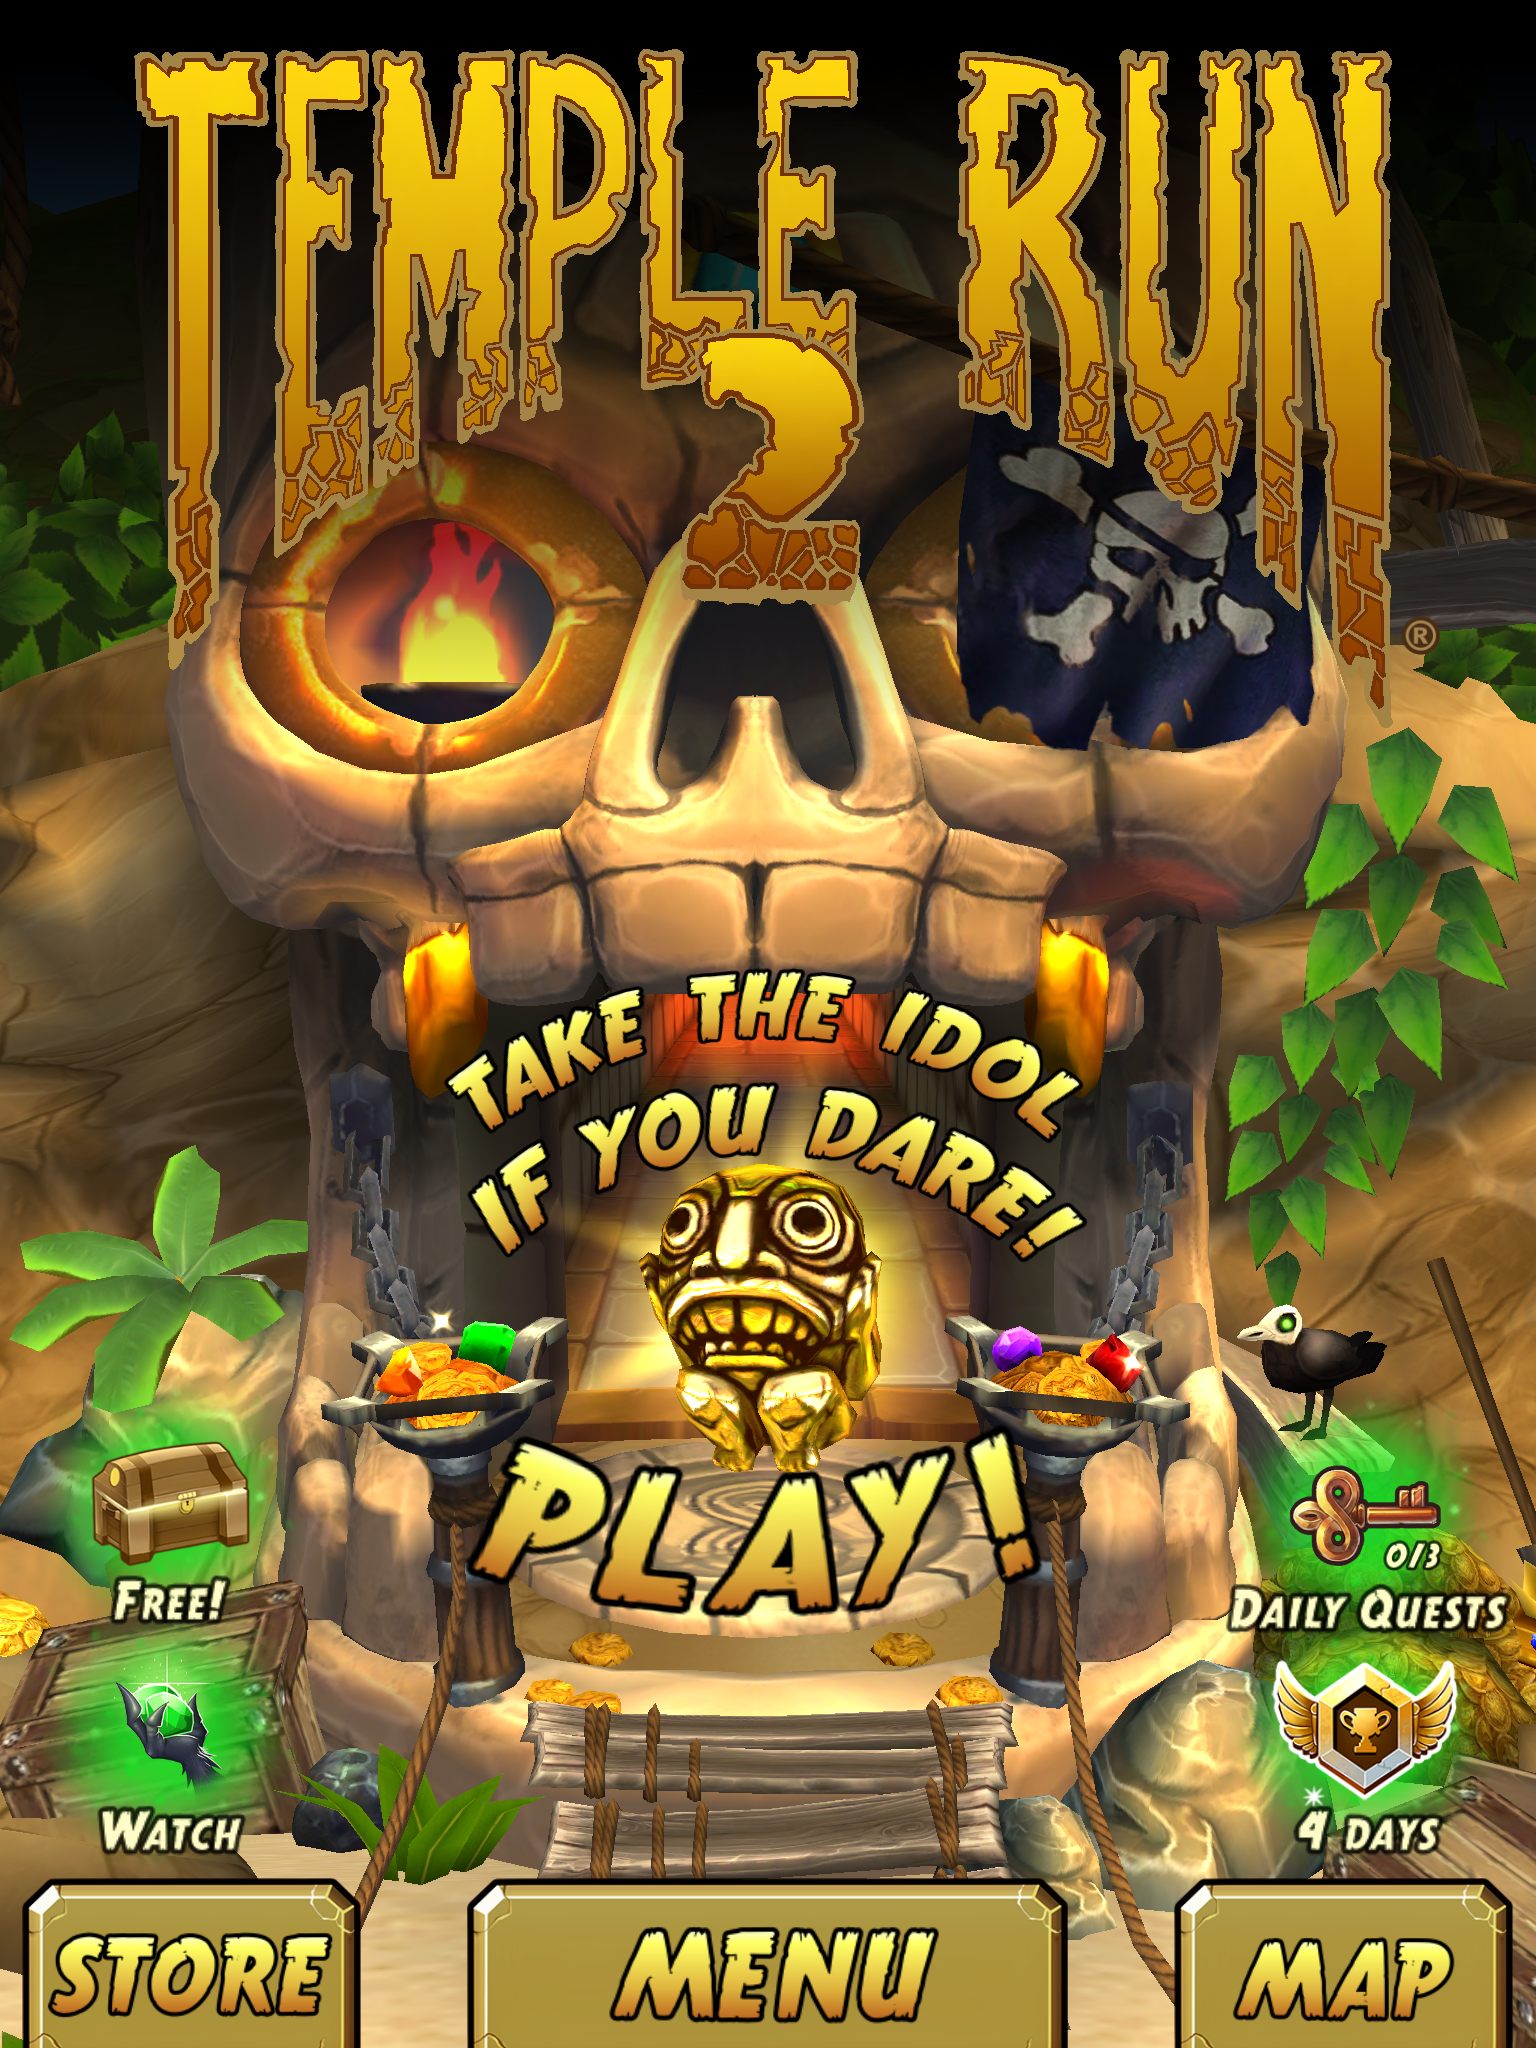 Temple Run 2: Lost Jungle- In Real Life 